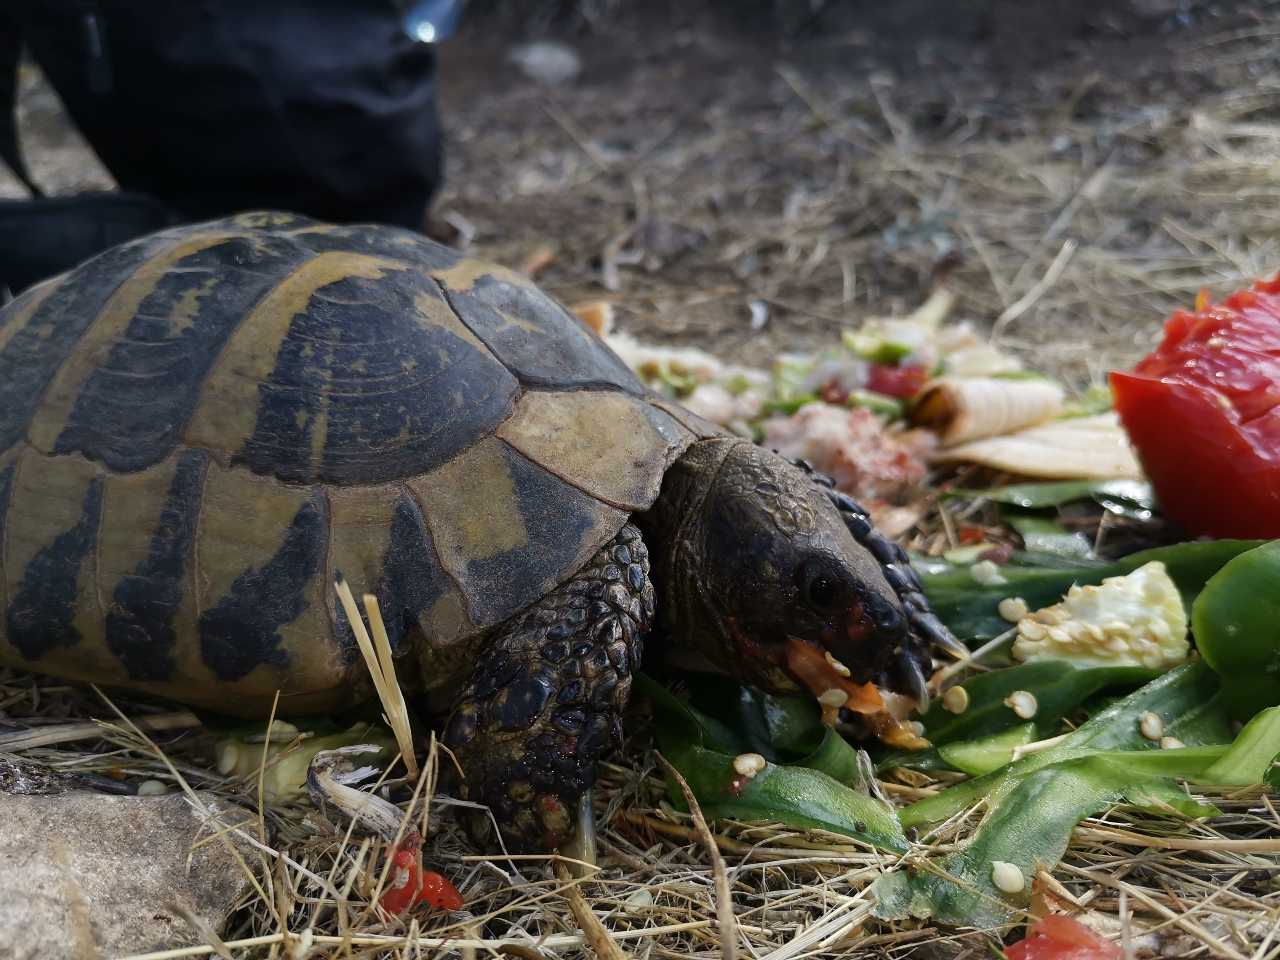 Turtels come eat when we do